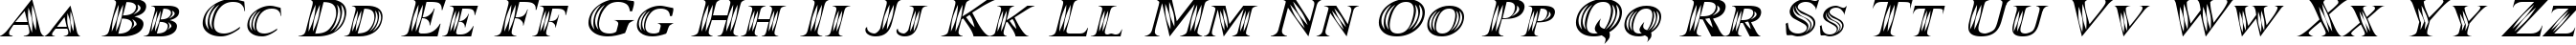 Пример написания английского алфавита шрифтом Maranallo Italic